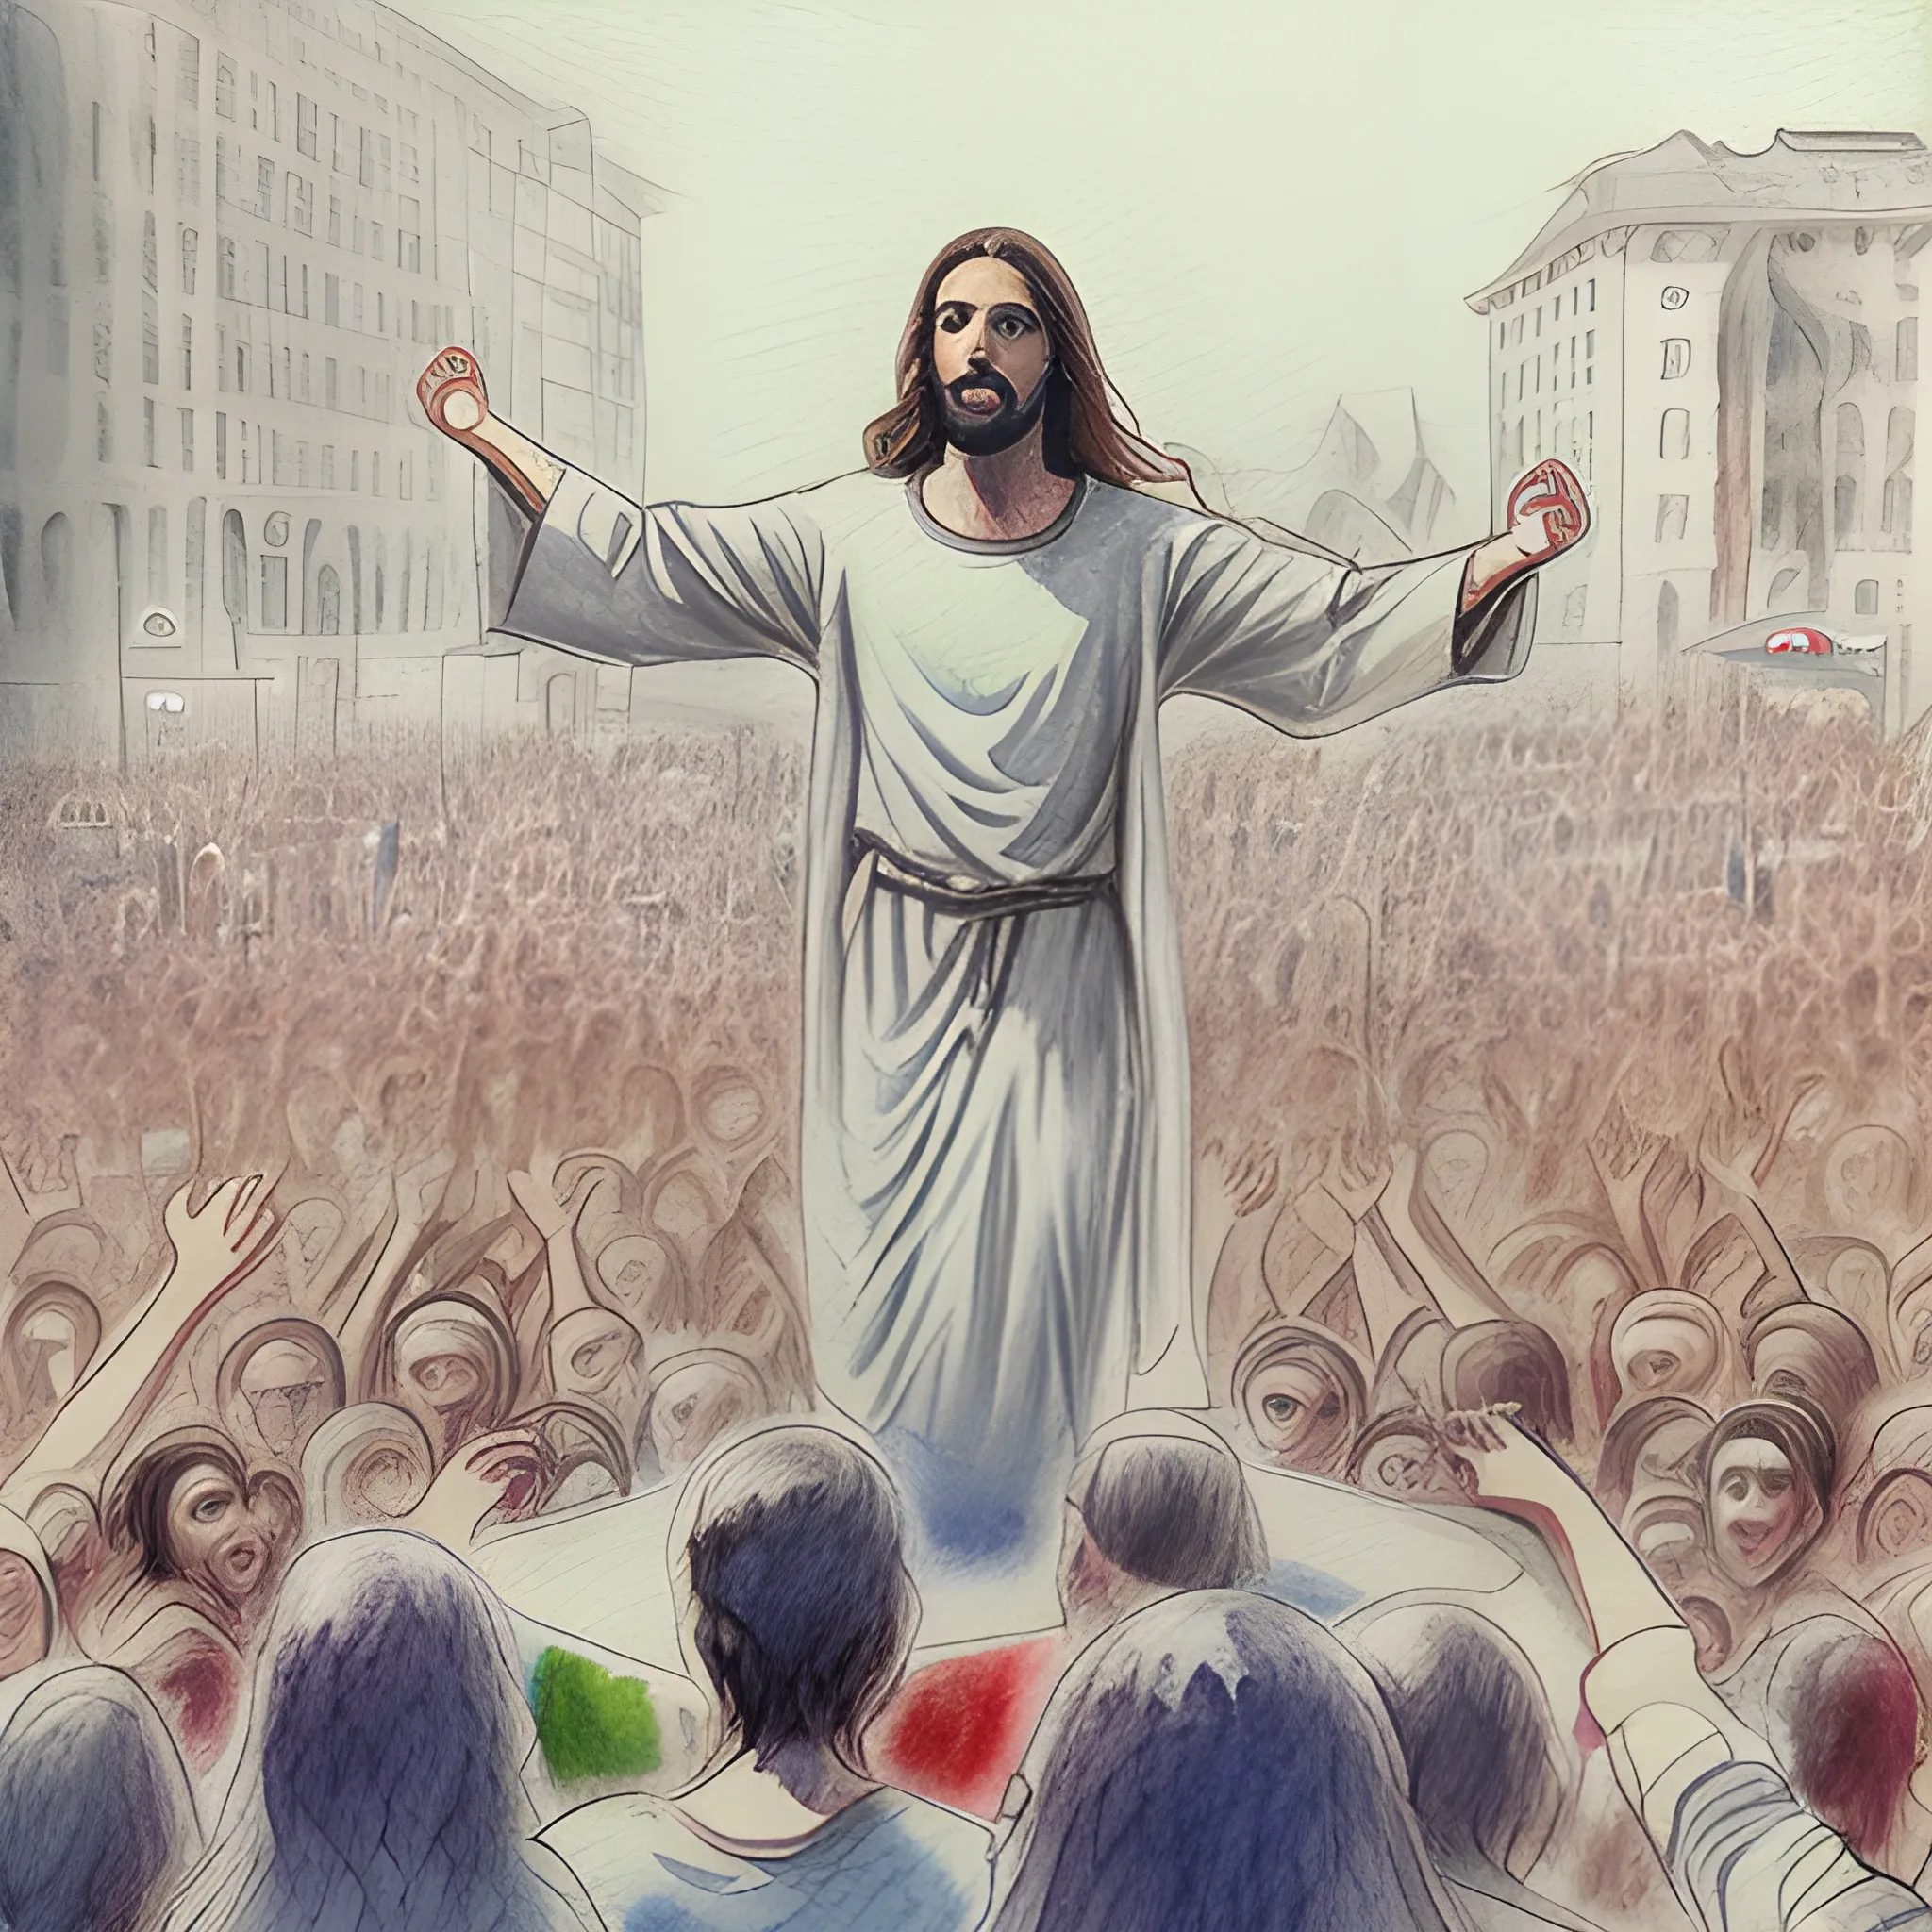 Jesus protesting crowd people around him
, Pencil Sketch, Water Color